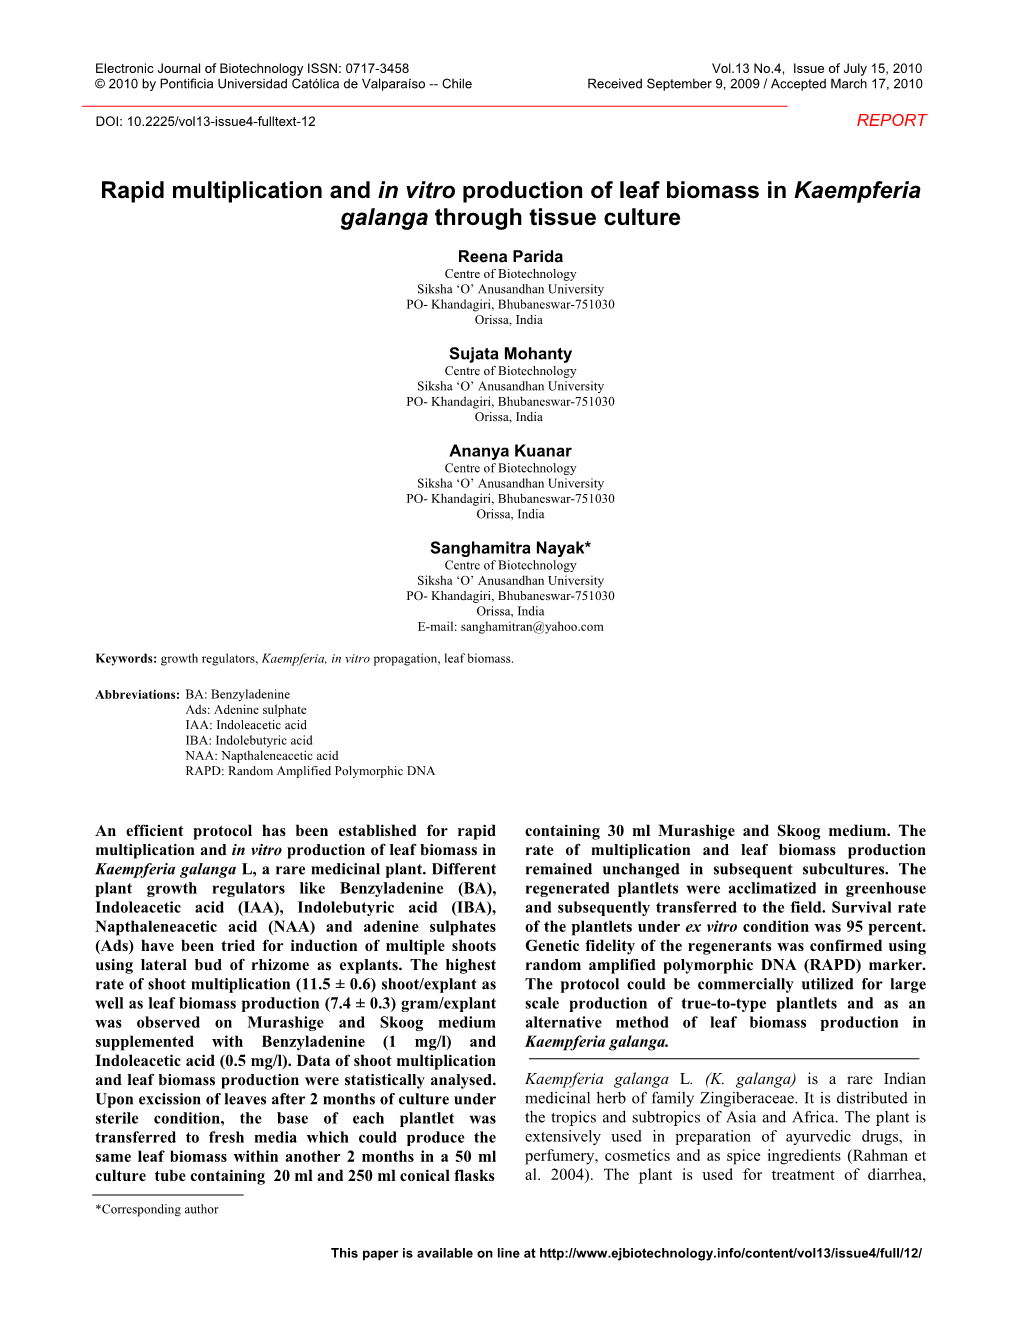 Rapid Multiplication and in Vitro Production of Leaf Biomass in Kaempferia Galanga Through Tissue Culture